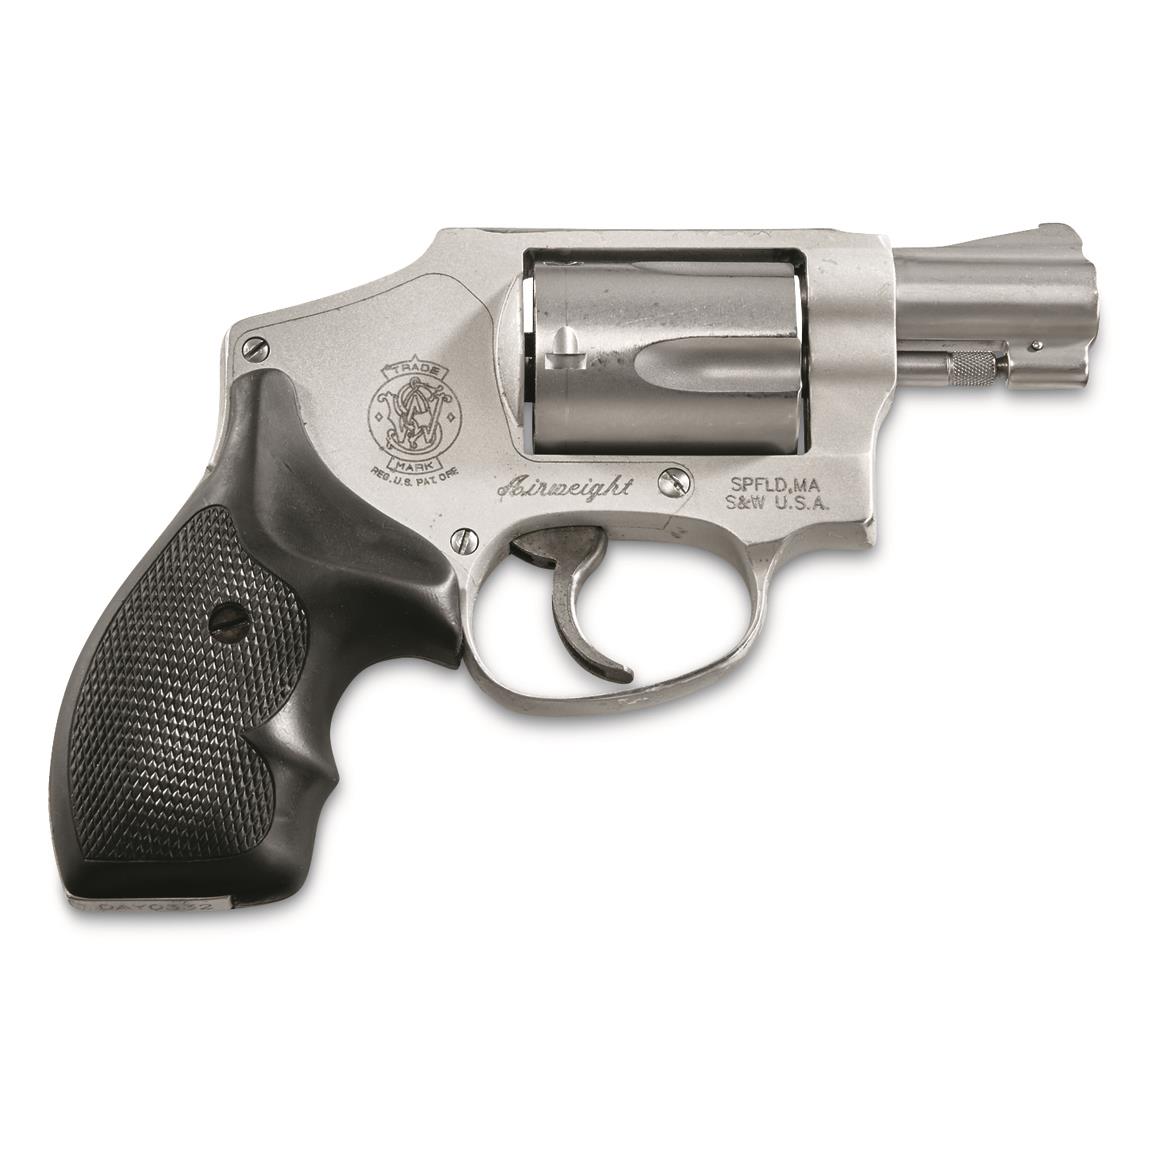 Smith & Wesson Model 642, Revolver, .38 Special +P, 1.875" Barrel, 5